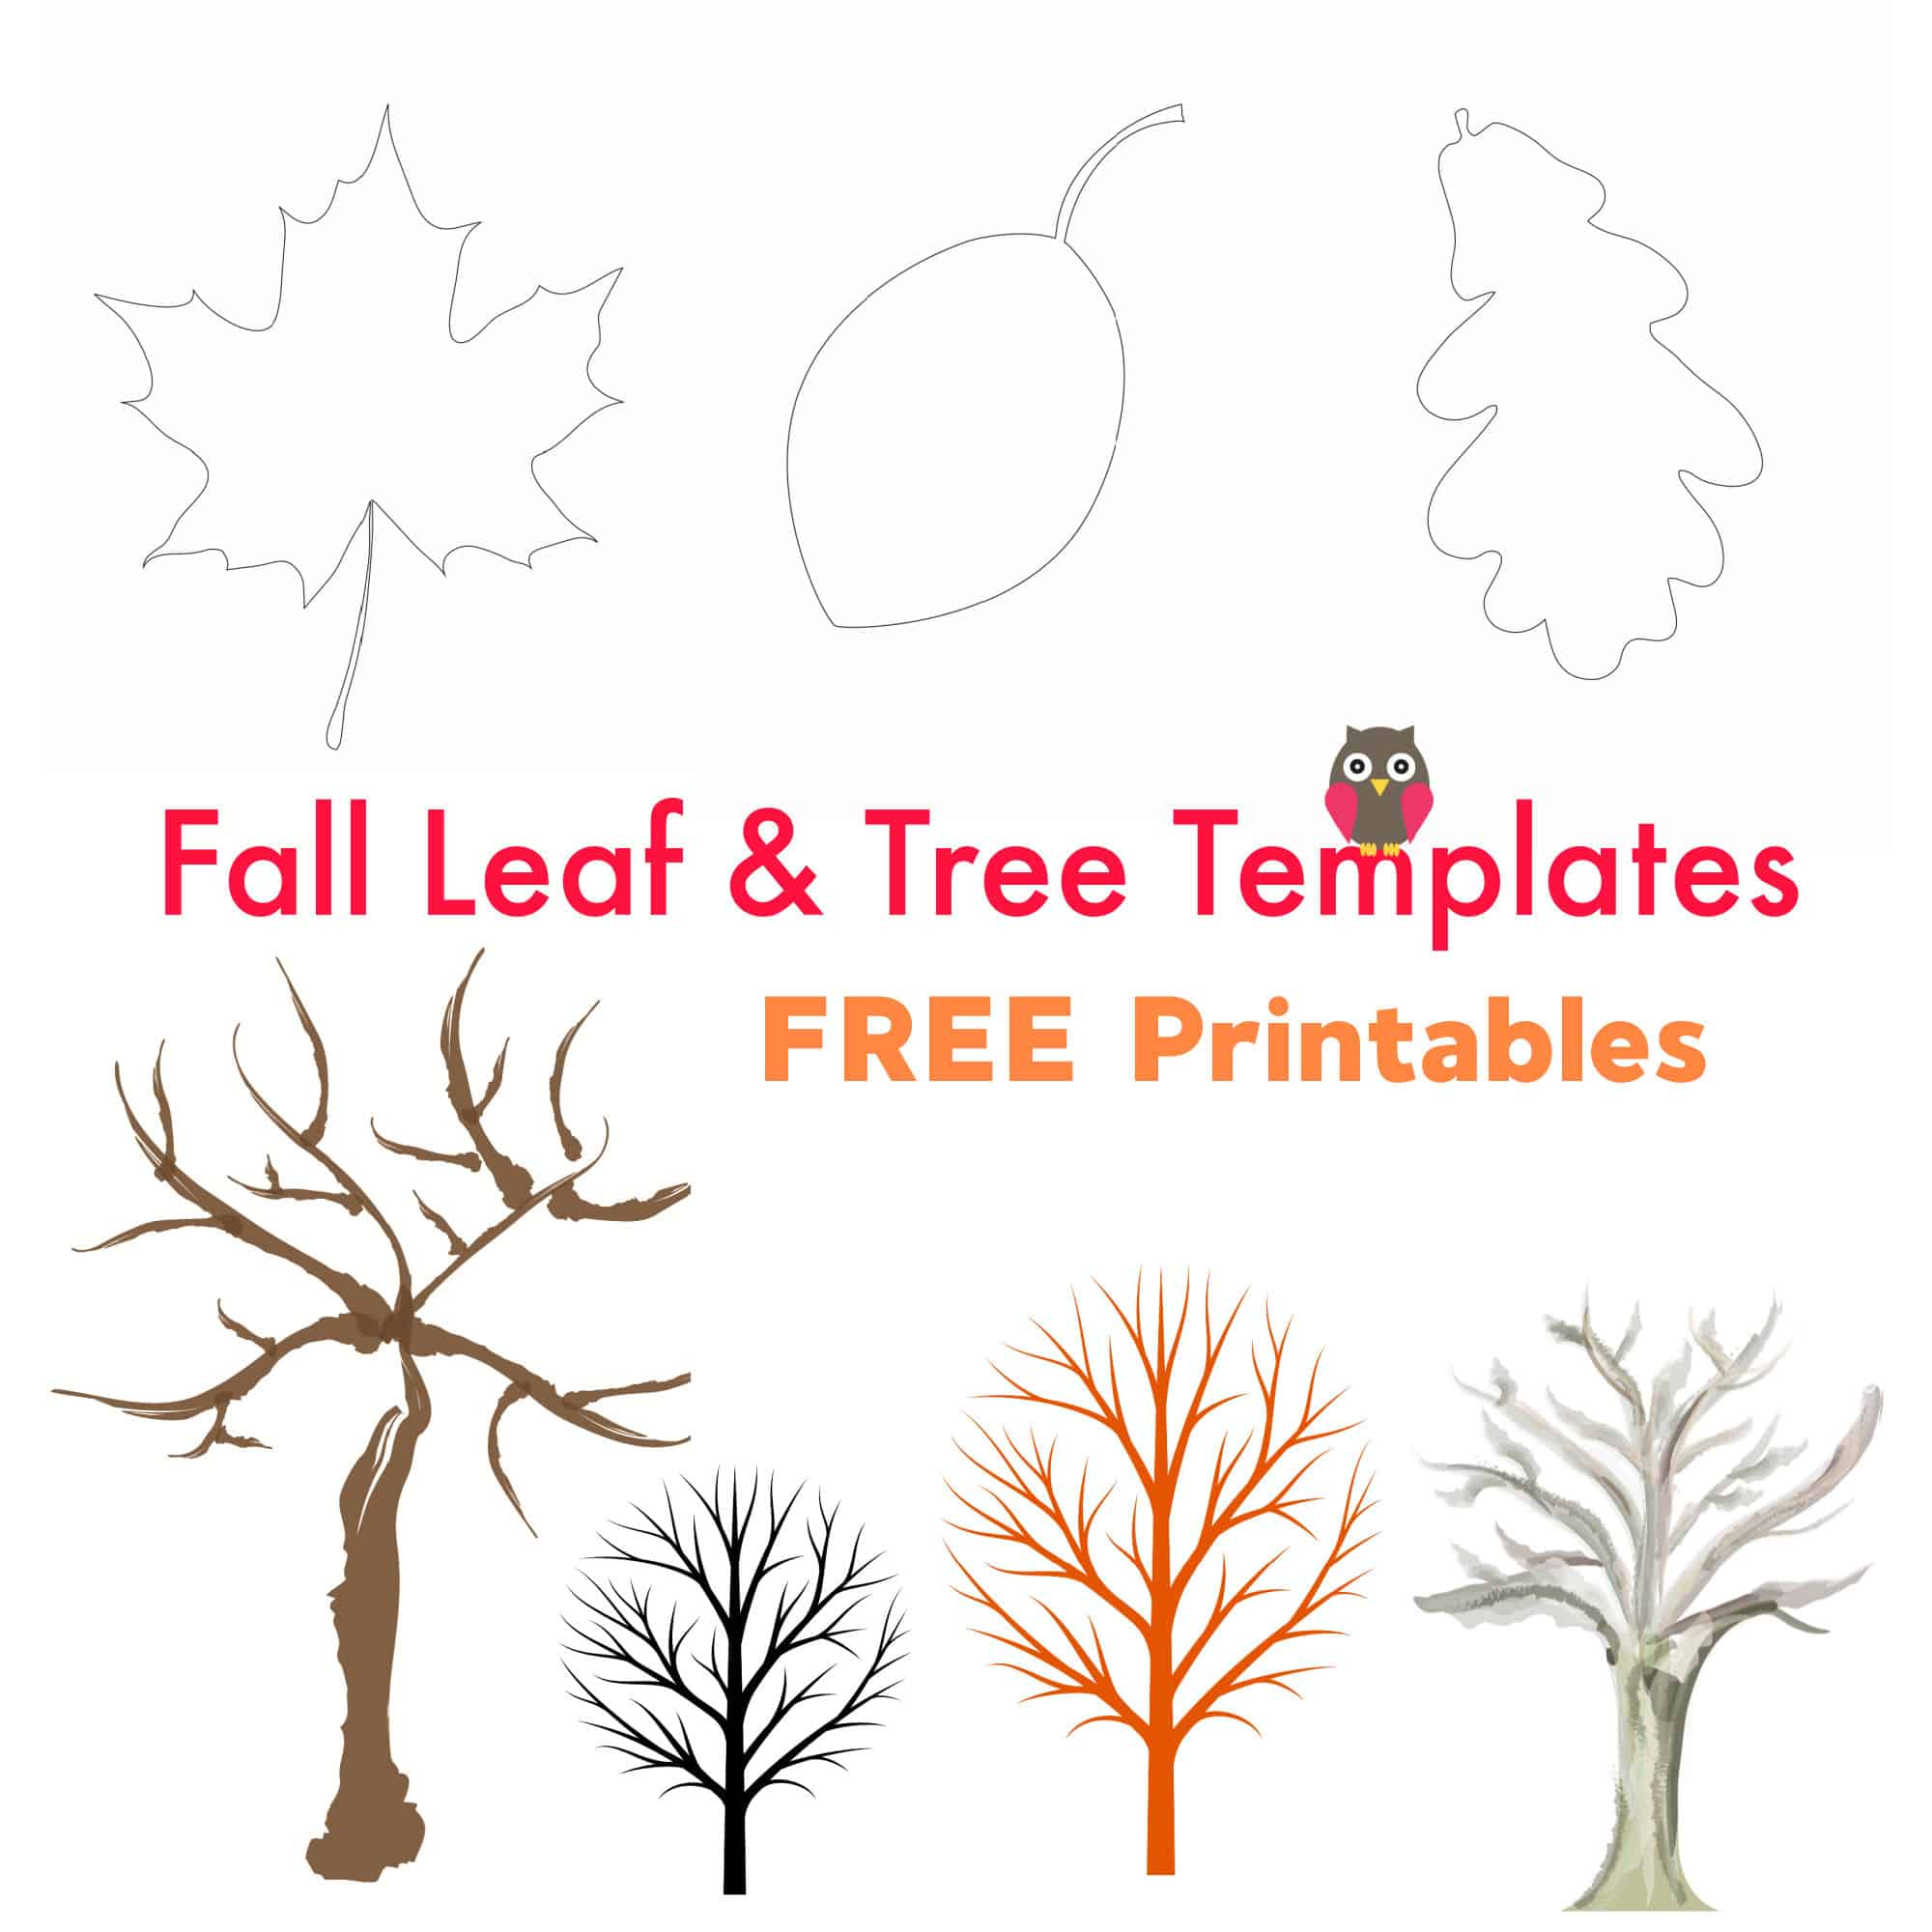 Free printable fall leaf and tree templates